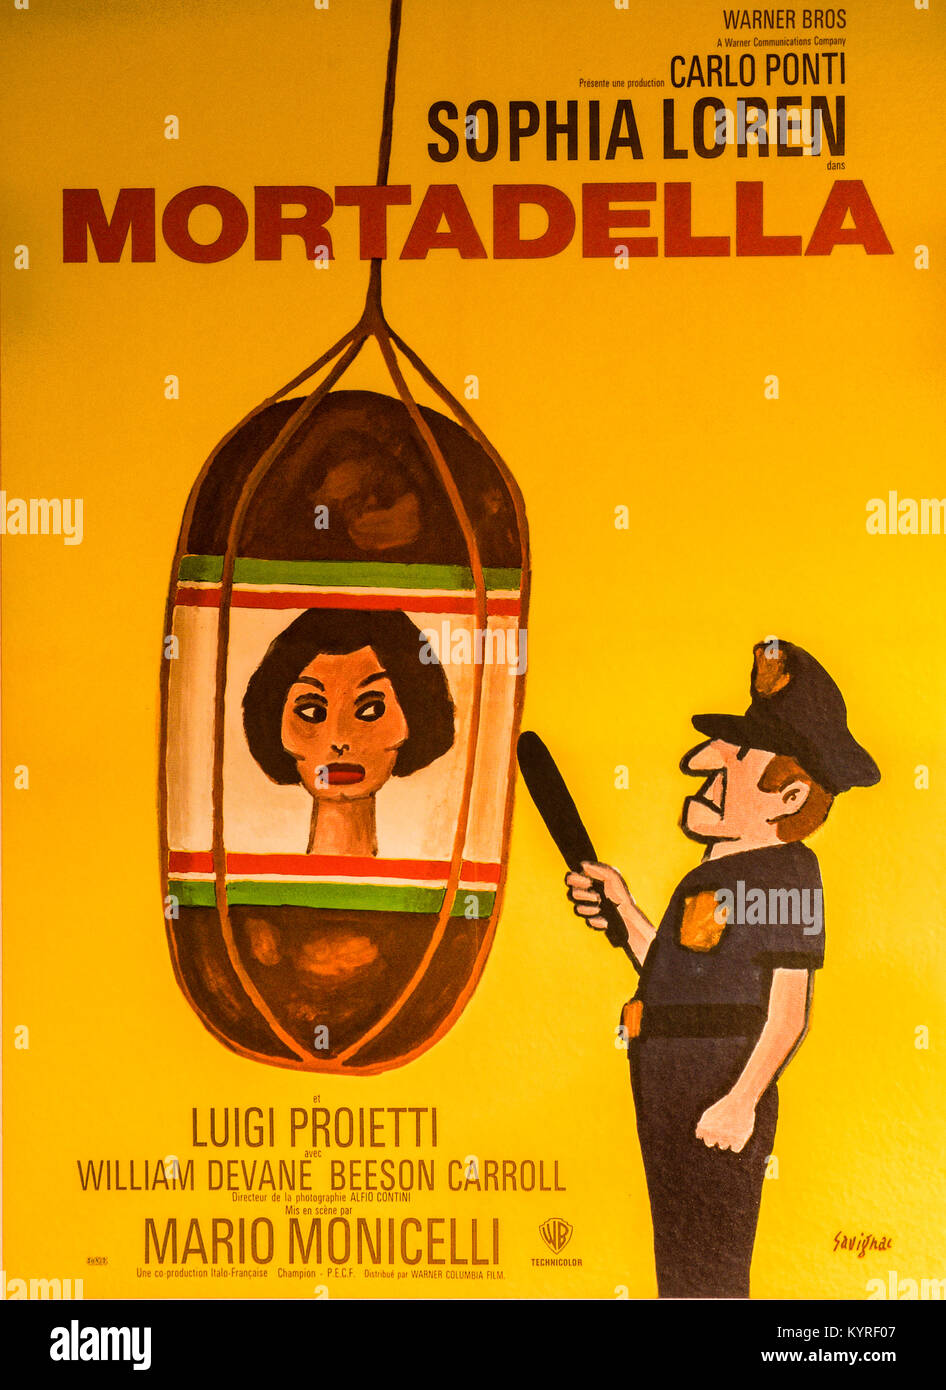 Italy Emilia Romagna Bologna FICO Eataly World Bologna - Consortium  Mortadella Bologna IGP - poster of film Mortadella by Monicelli Stock Photo  - Alamy